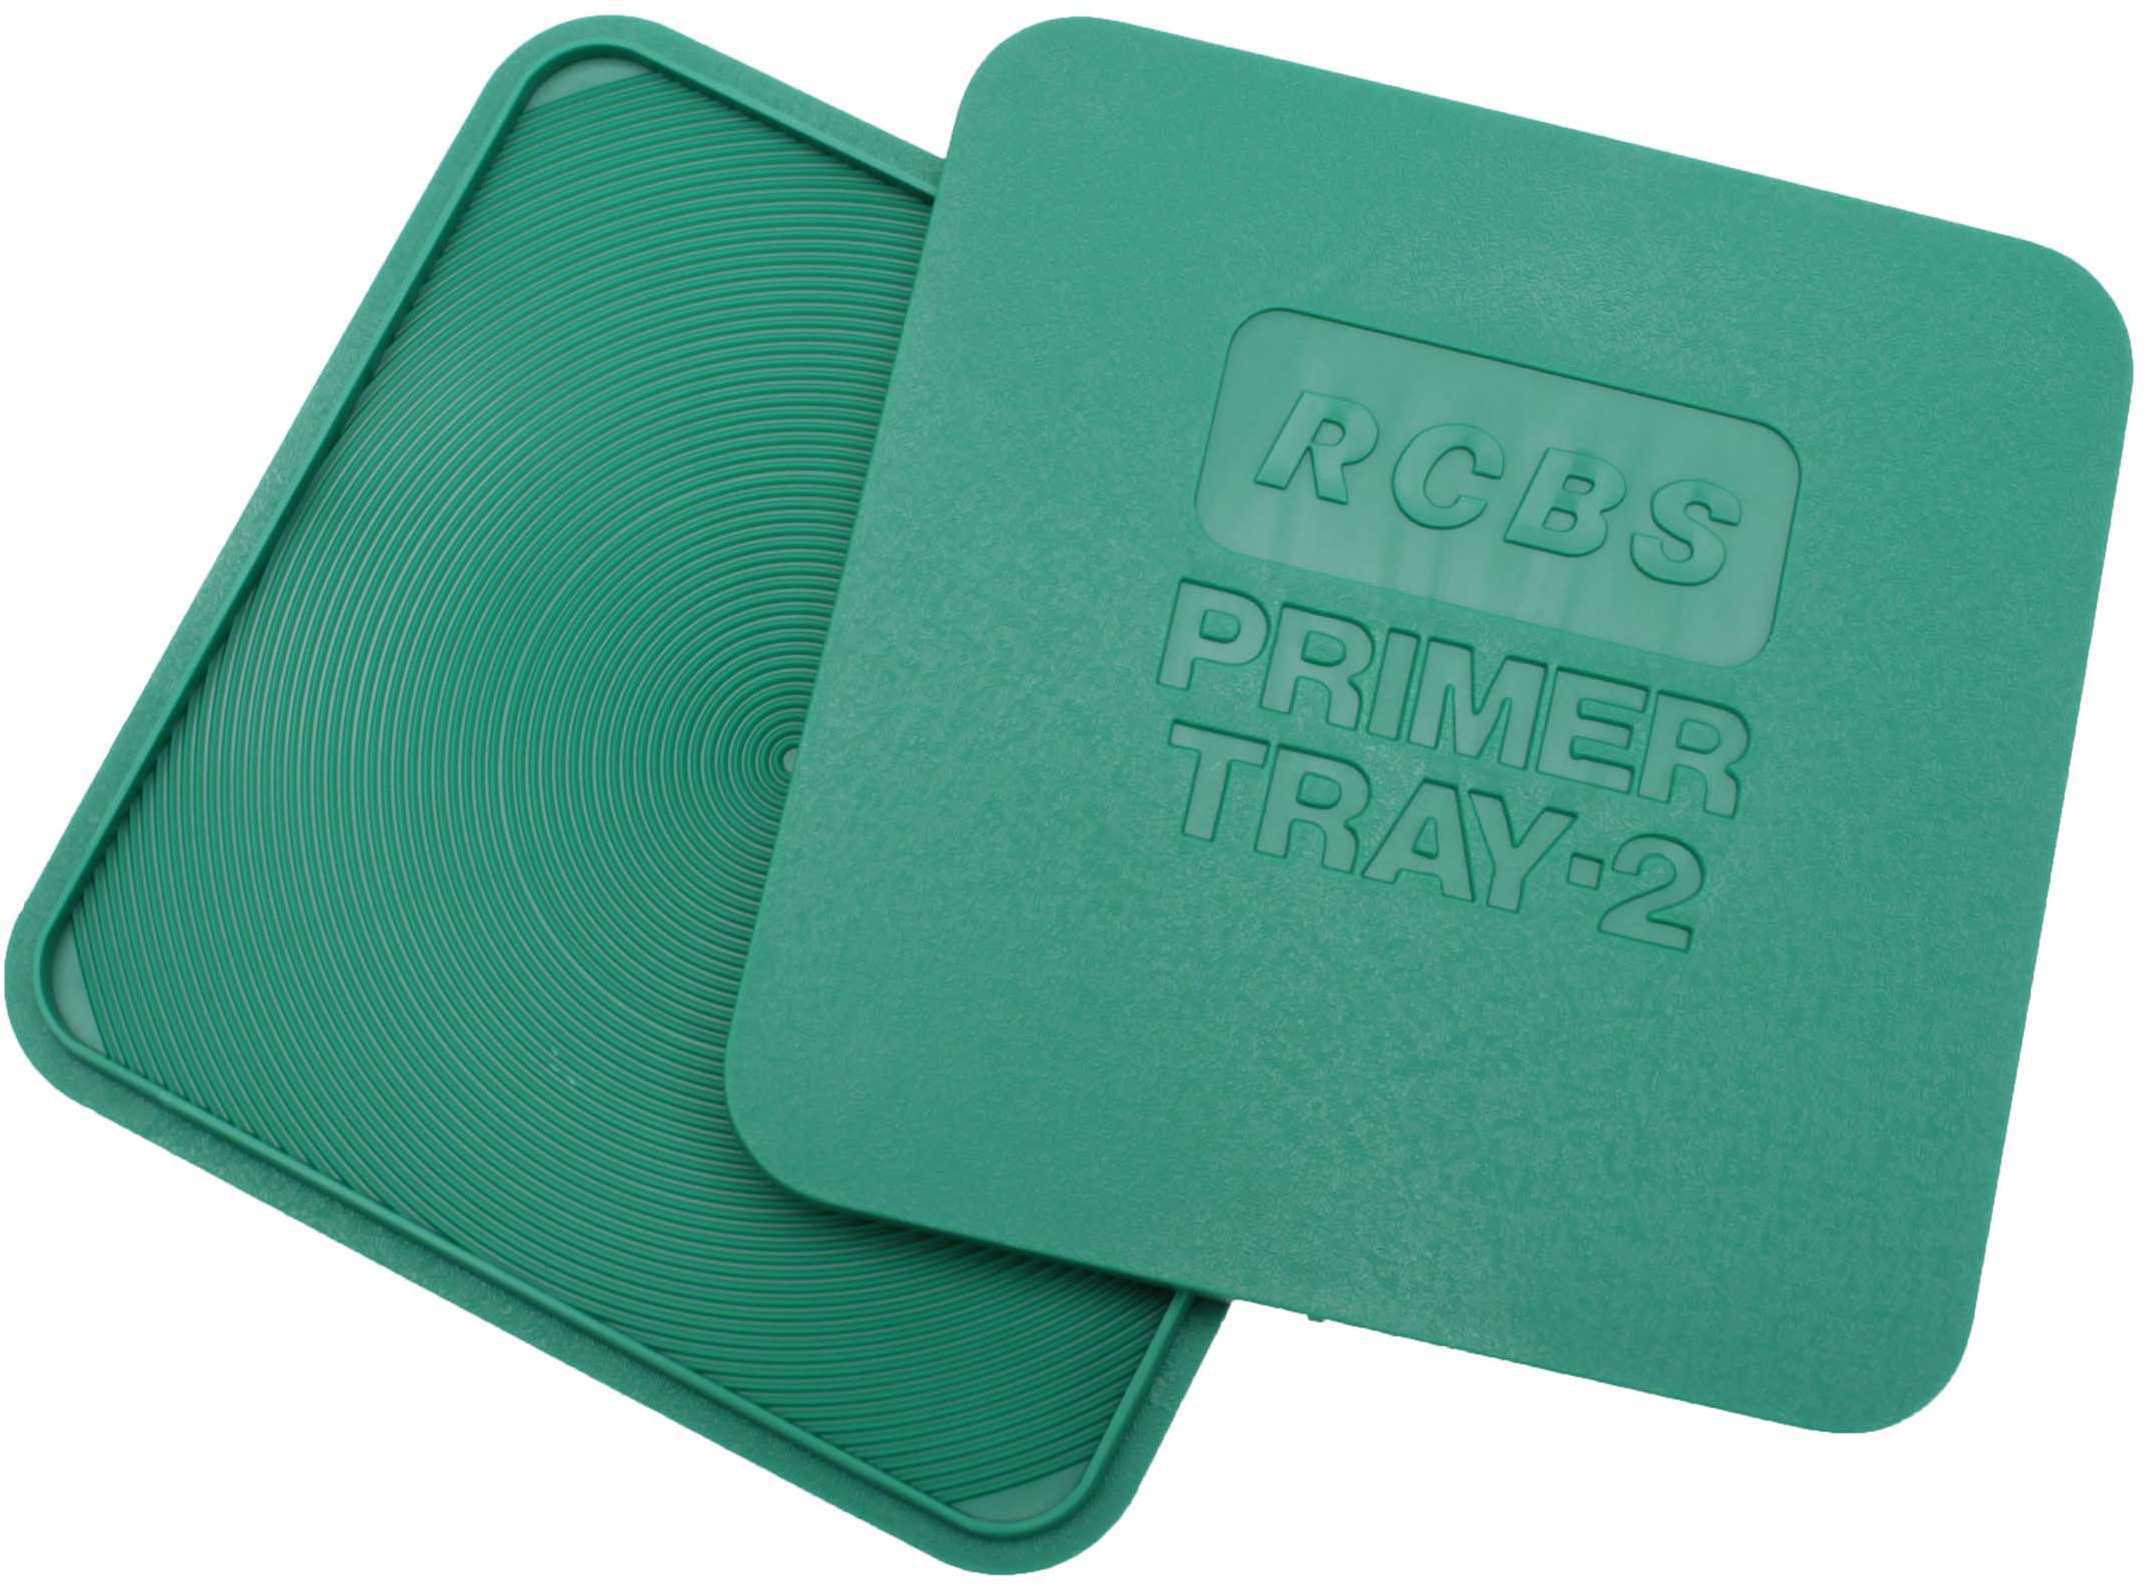 RCBS 9480 Primer Priming Tray Multi-Caliber Universal